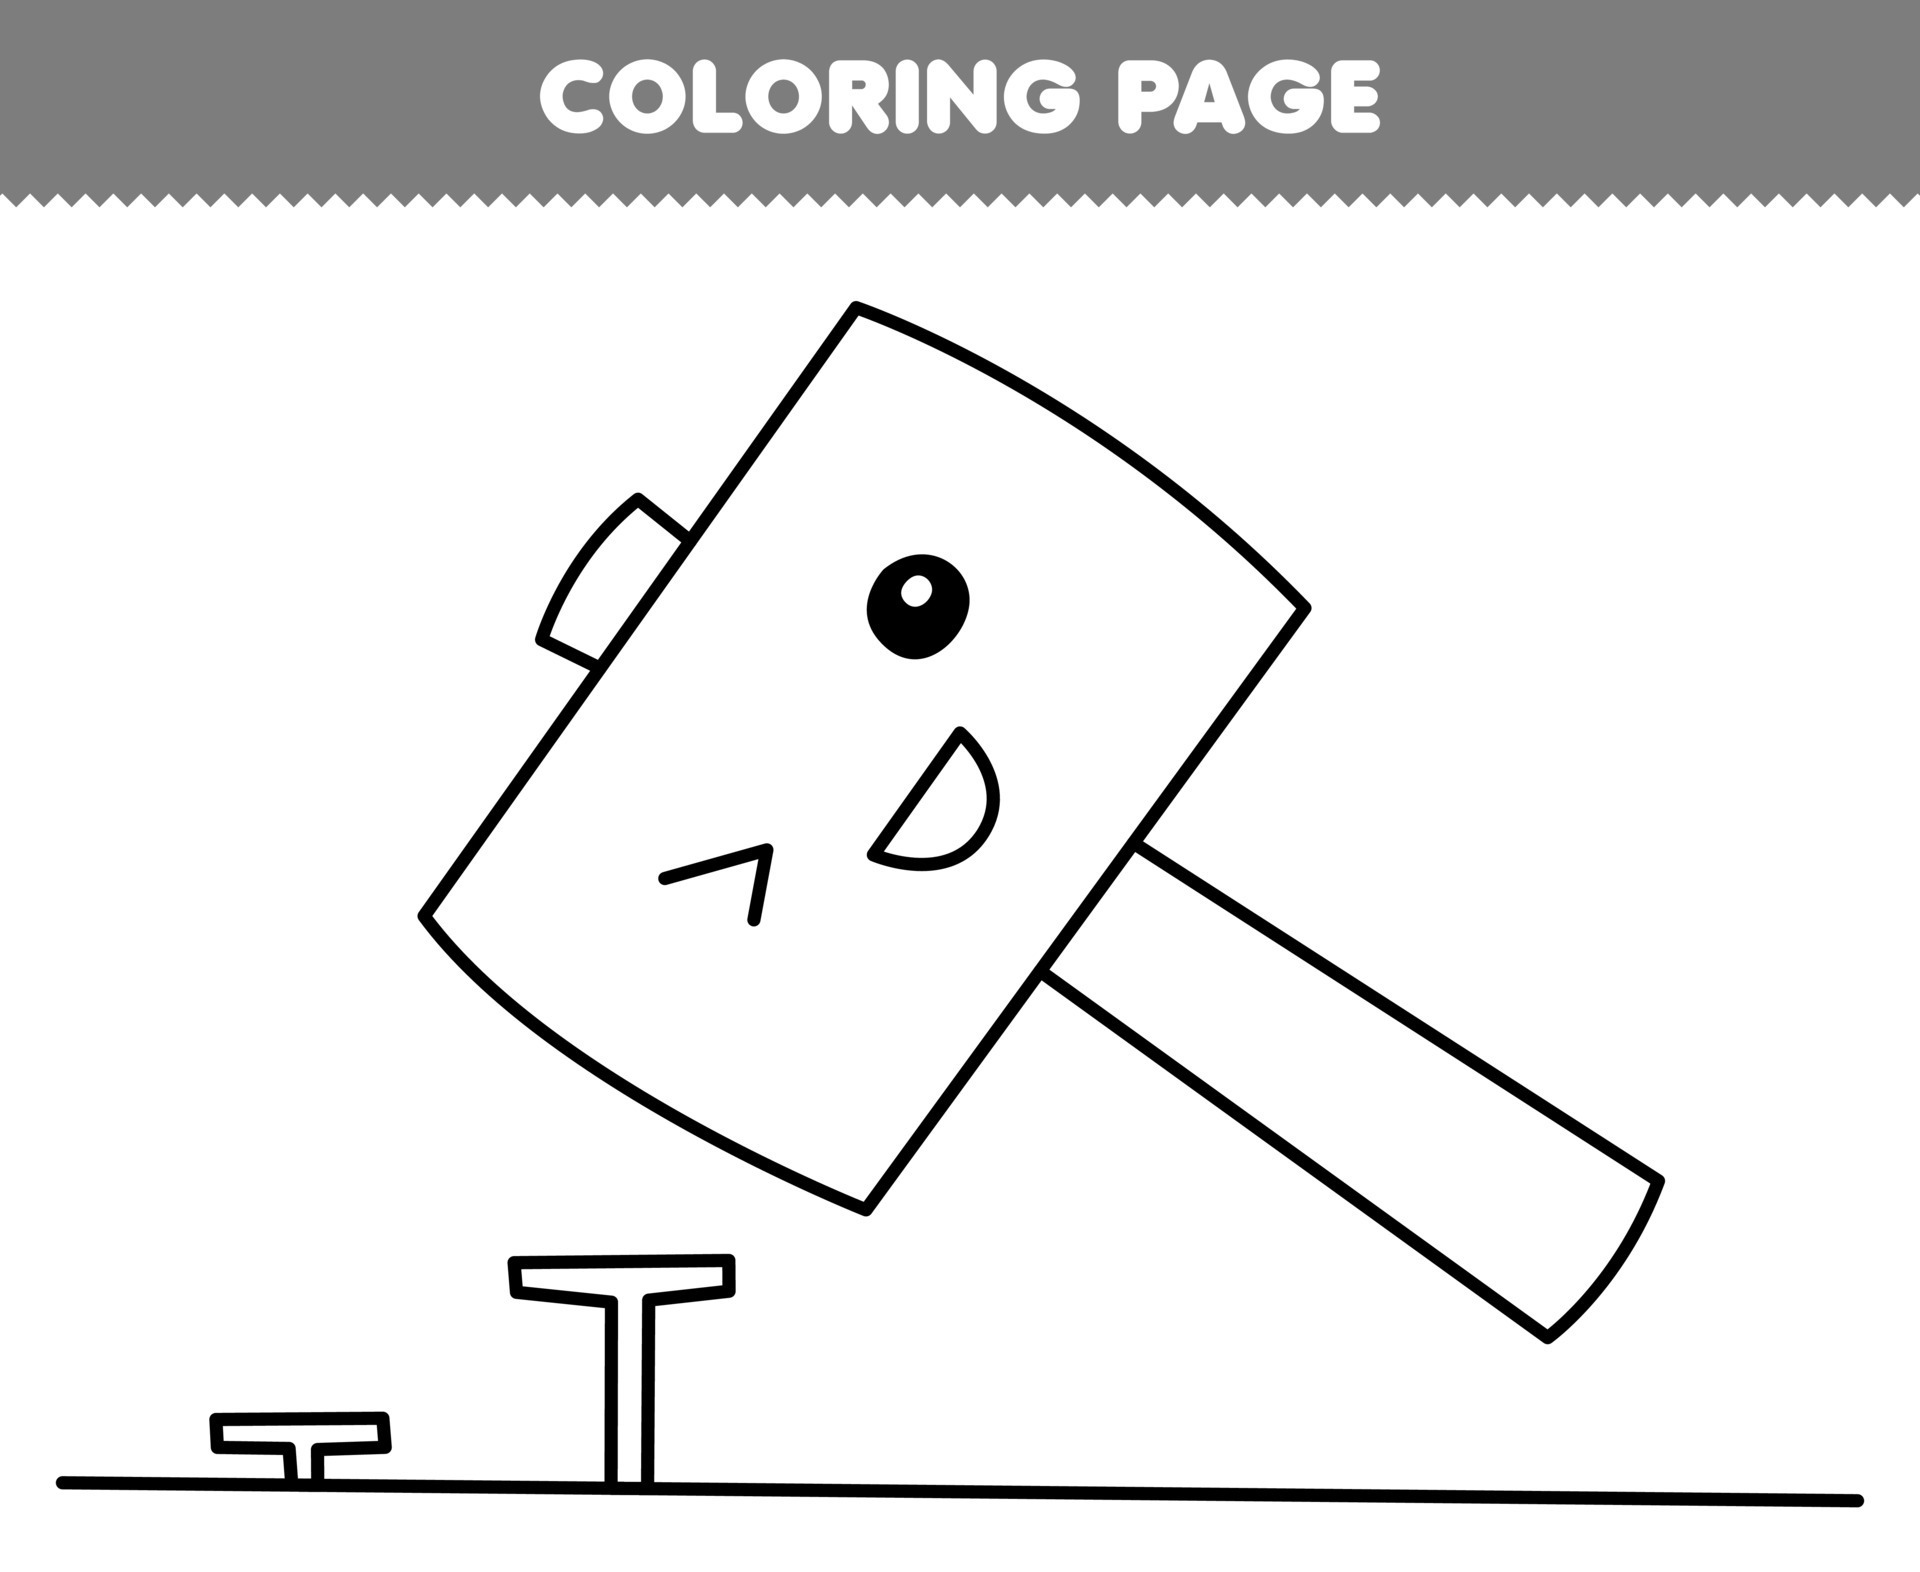 Desenhos para colorir de Minecraft para crianças - Desenhos para colorir  gratuitos para impressão